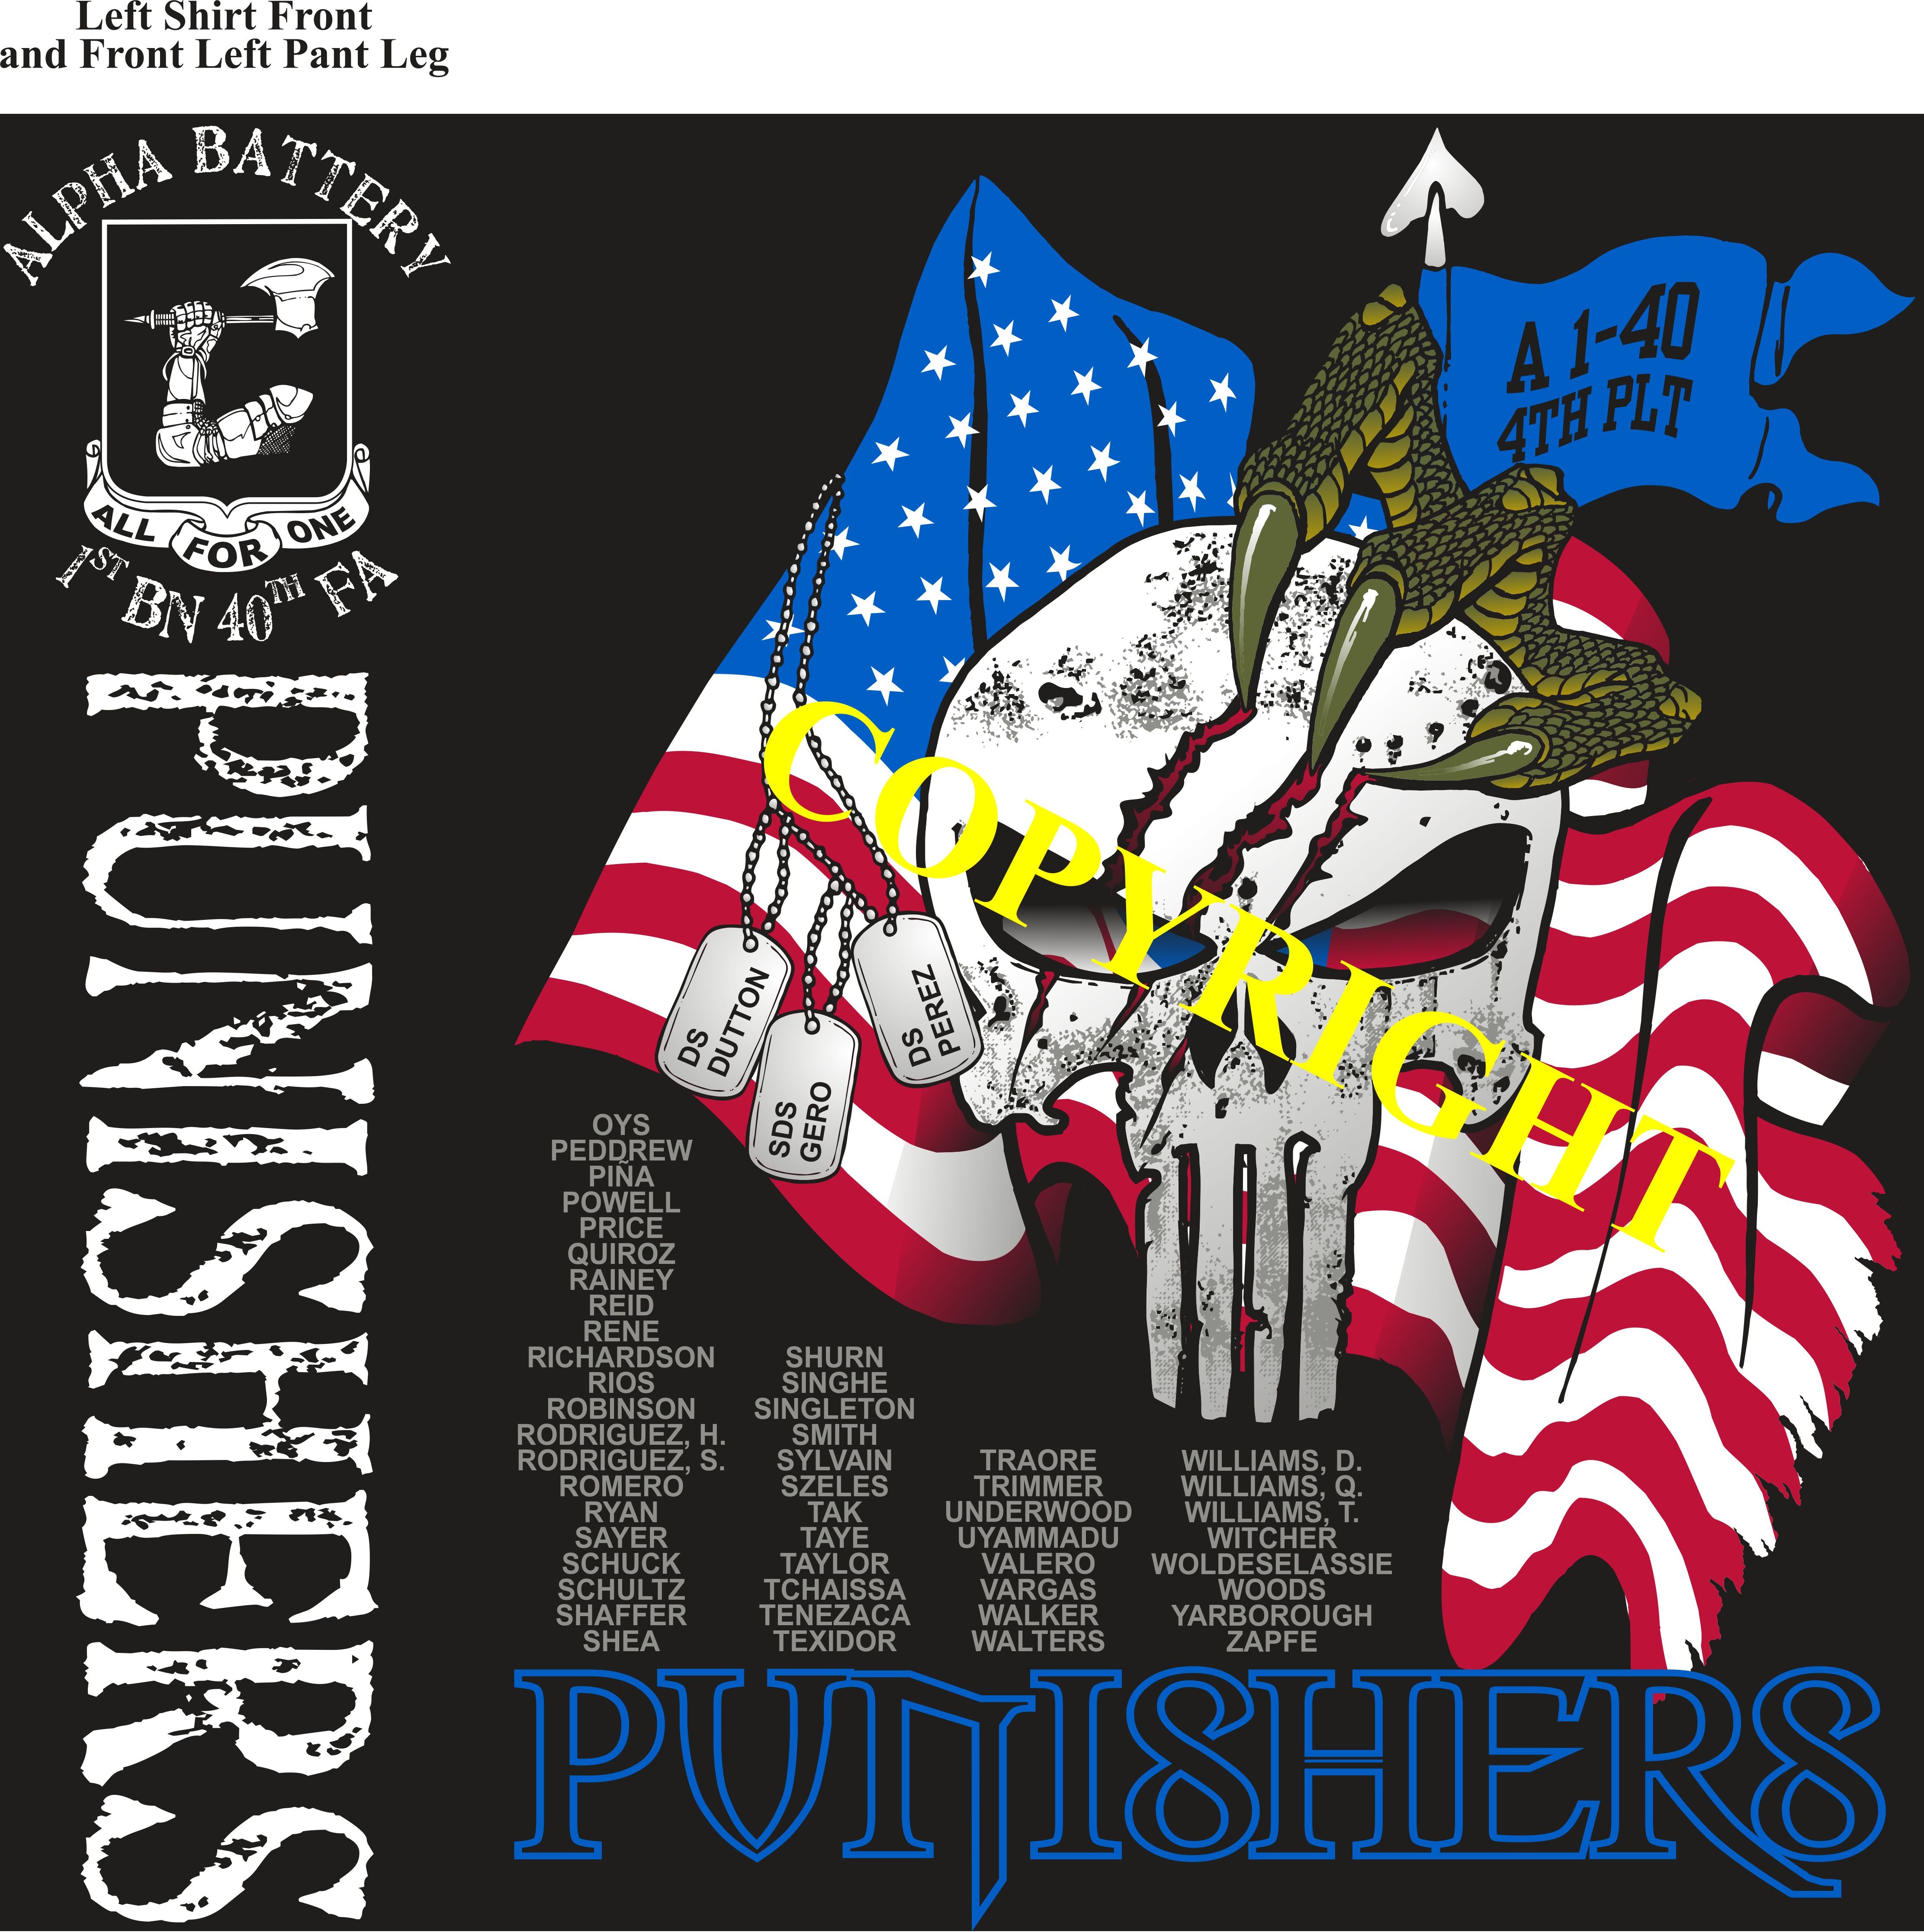 Platoon Shirts (2nd generation print) ALPHA 1st 40th PUNISHERS MAY 2019